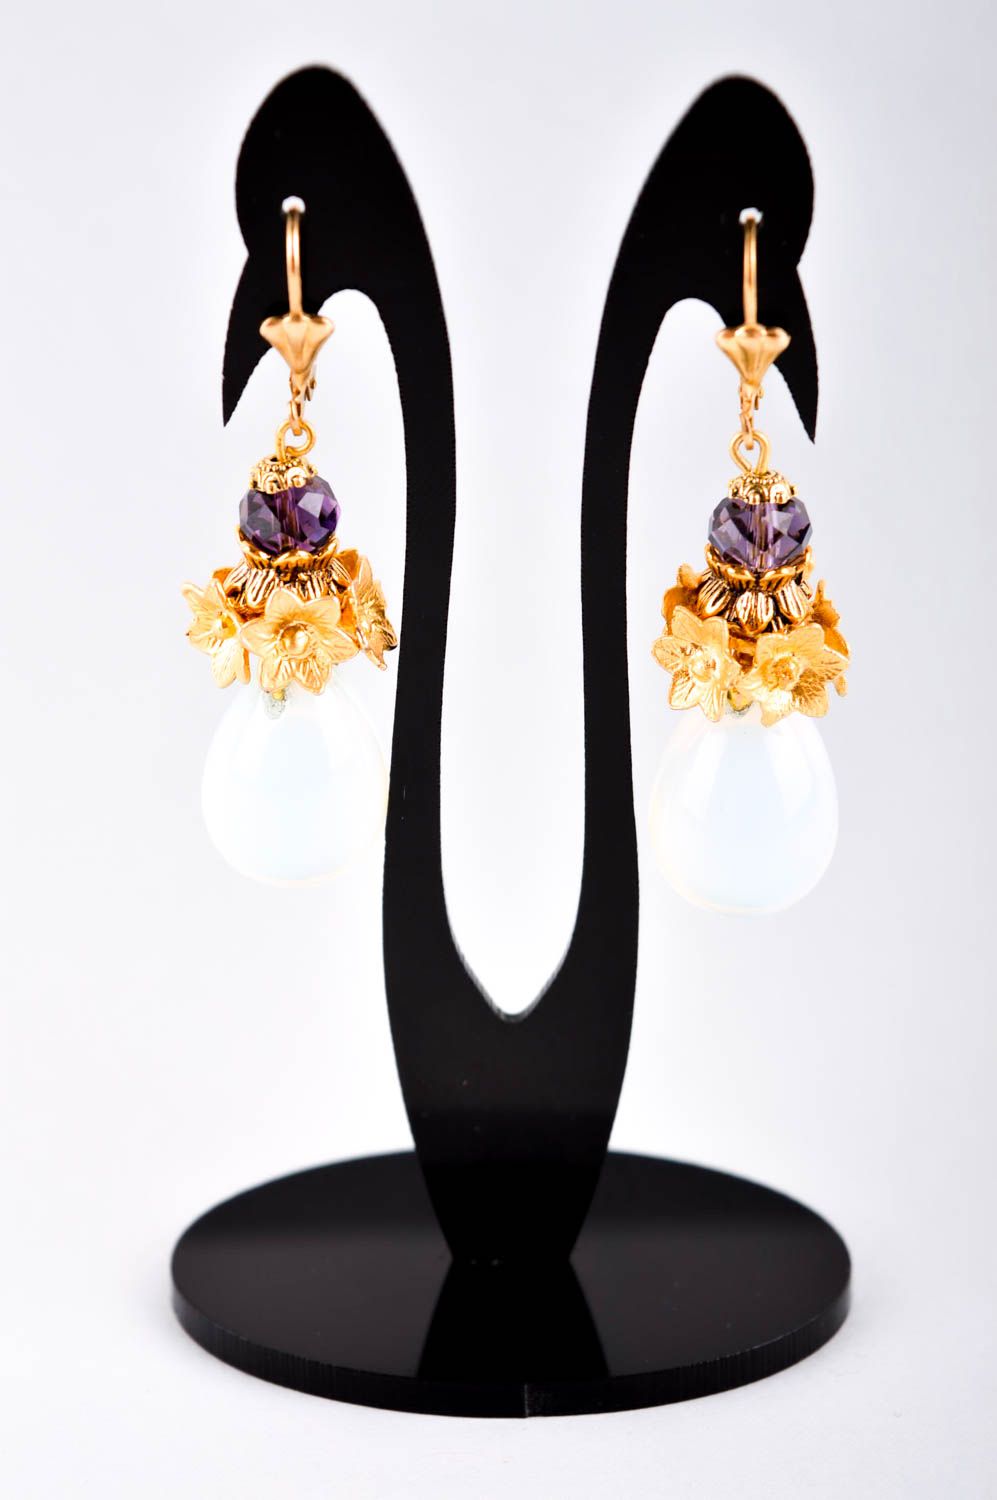 Handmade earrings designer accessory unusual earrings with stones gift ideas photo 2